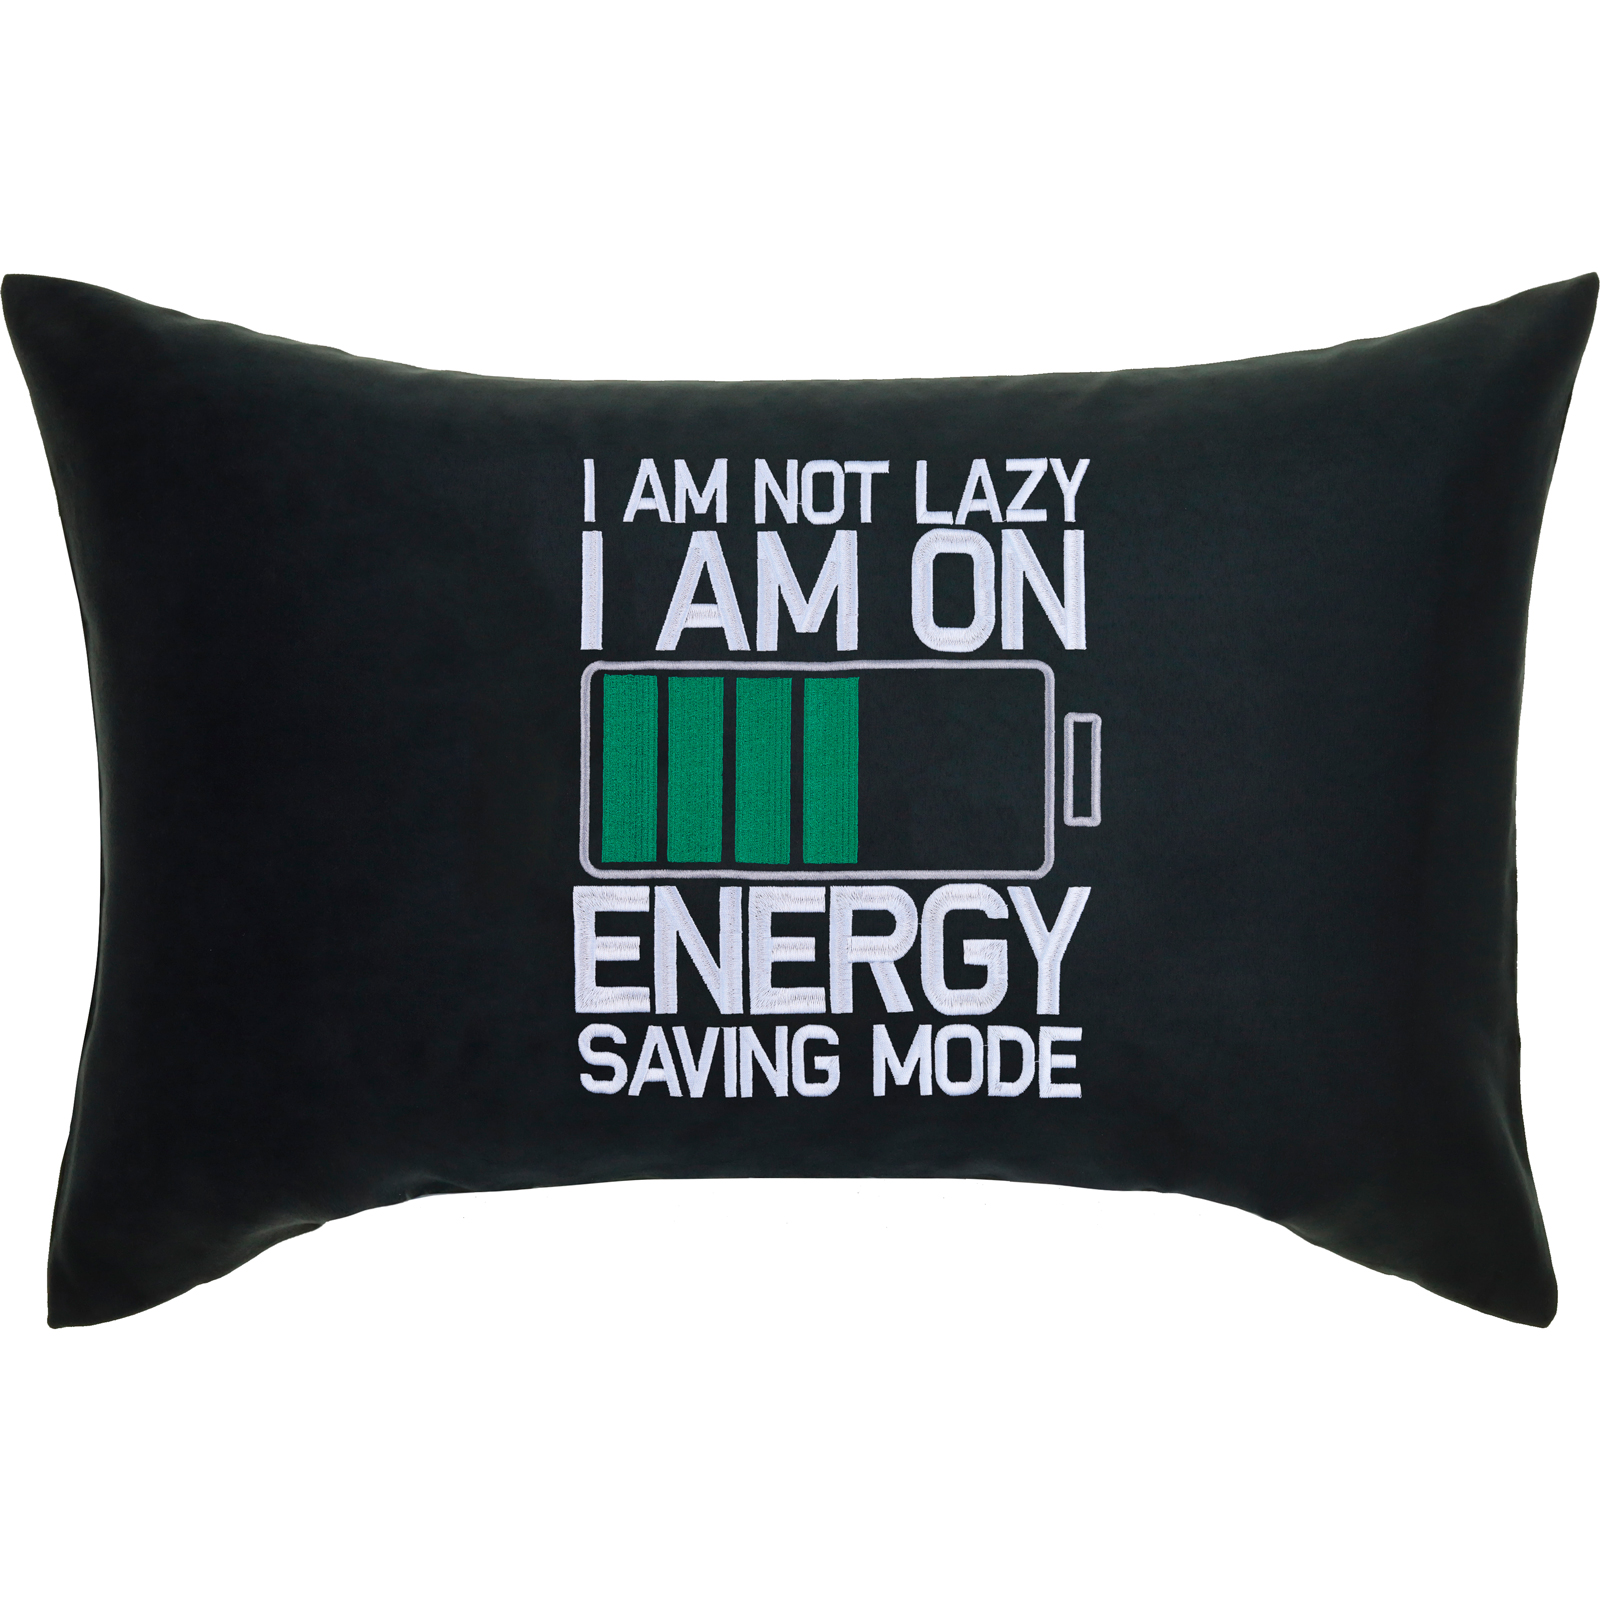 I am on Energy Saving Mode